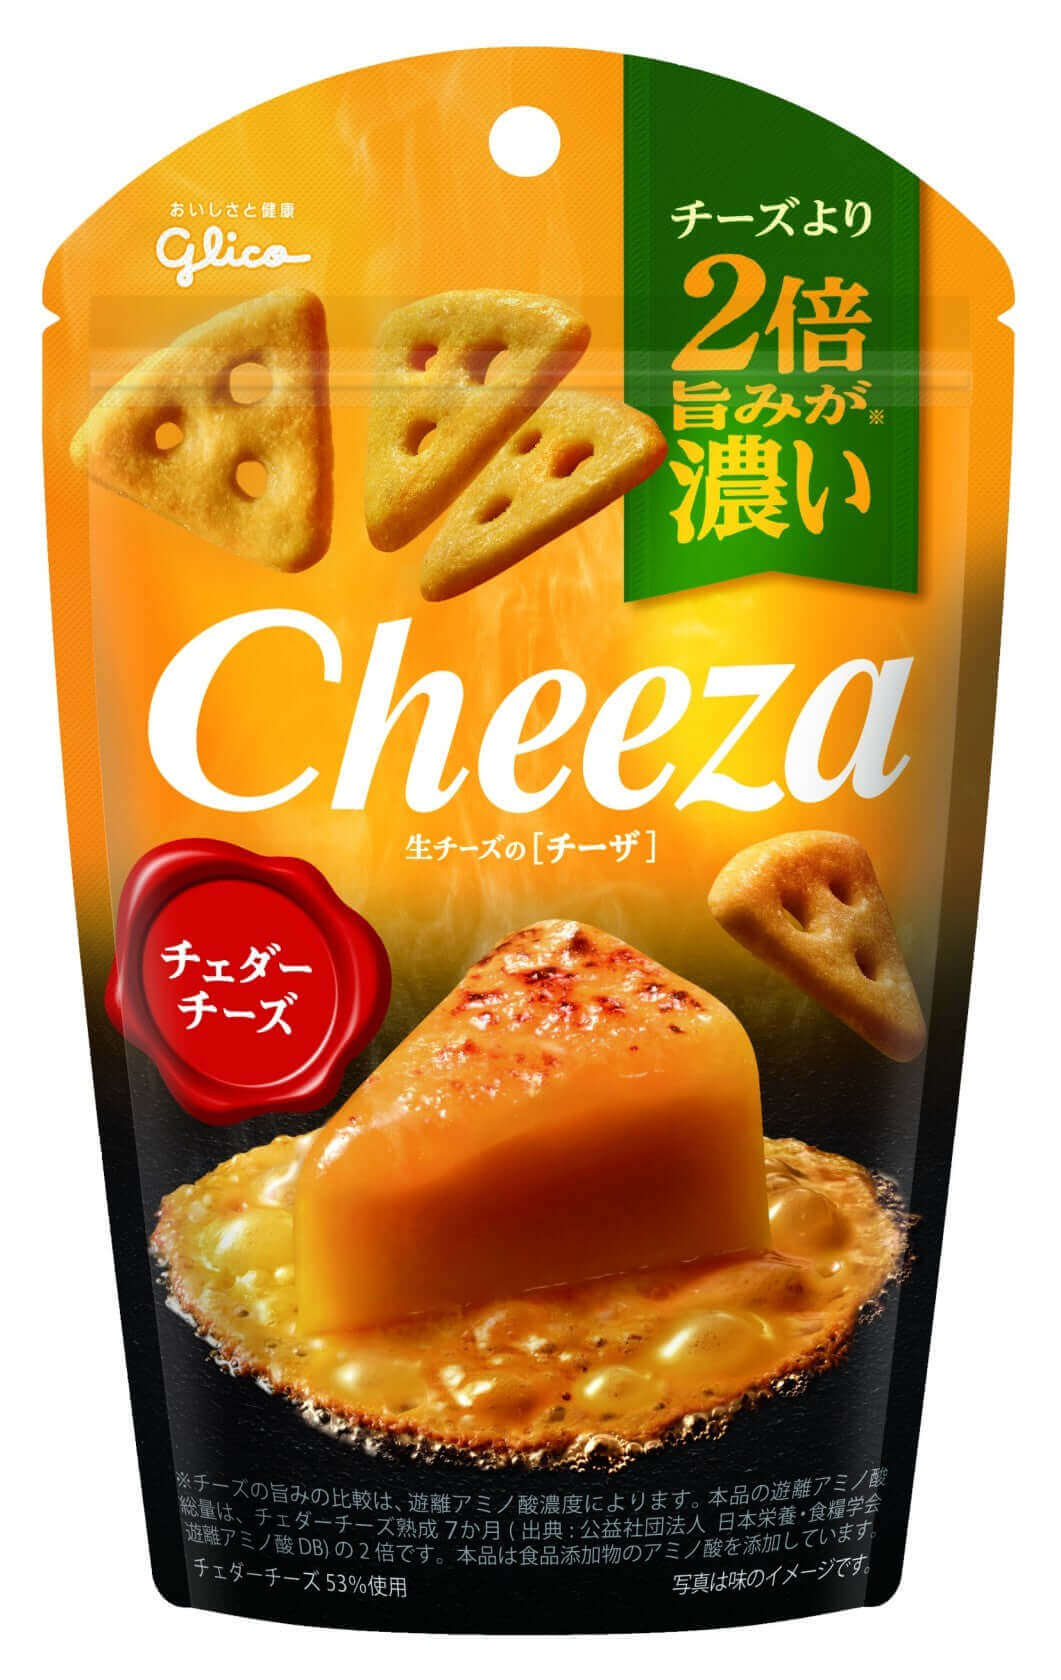 Glico Cheeza Cheddar Cheese Crackers